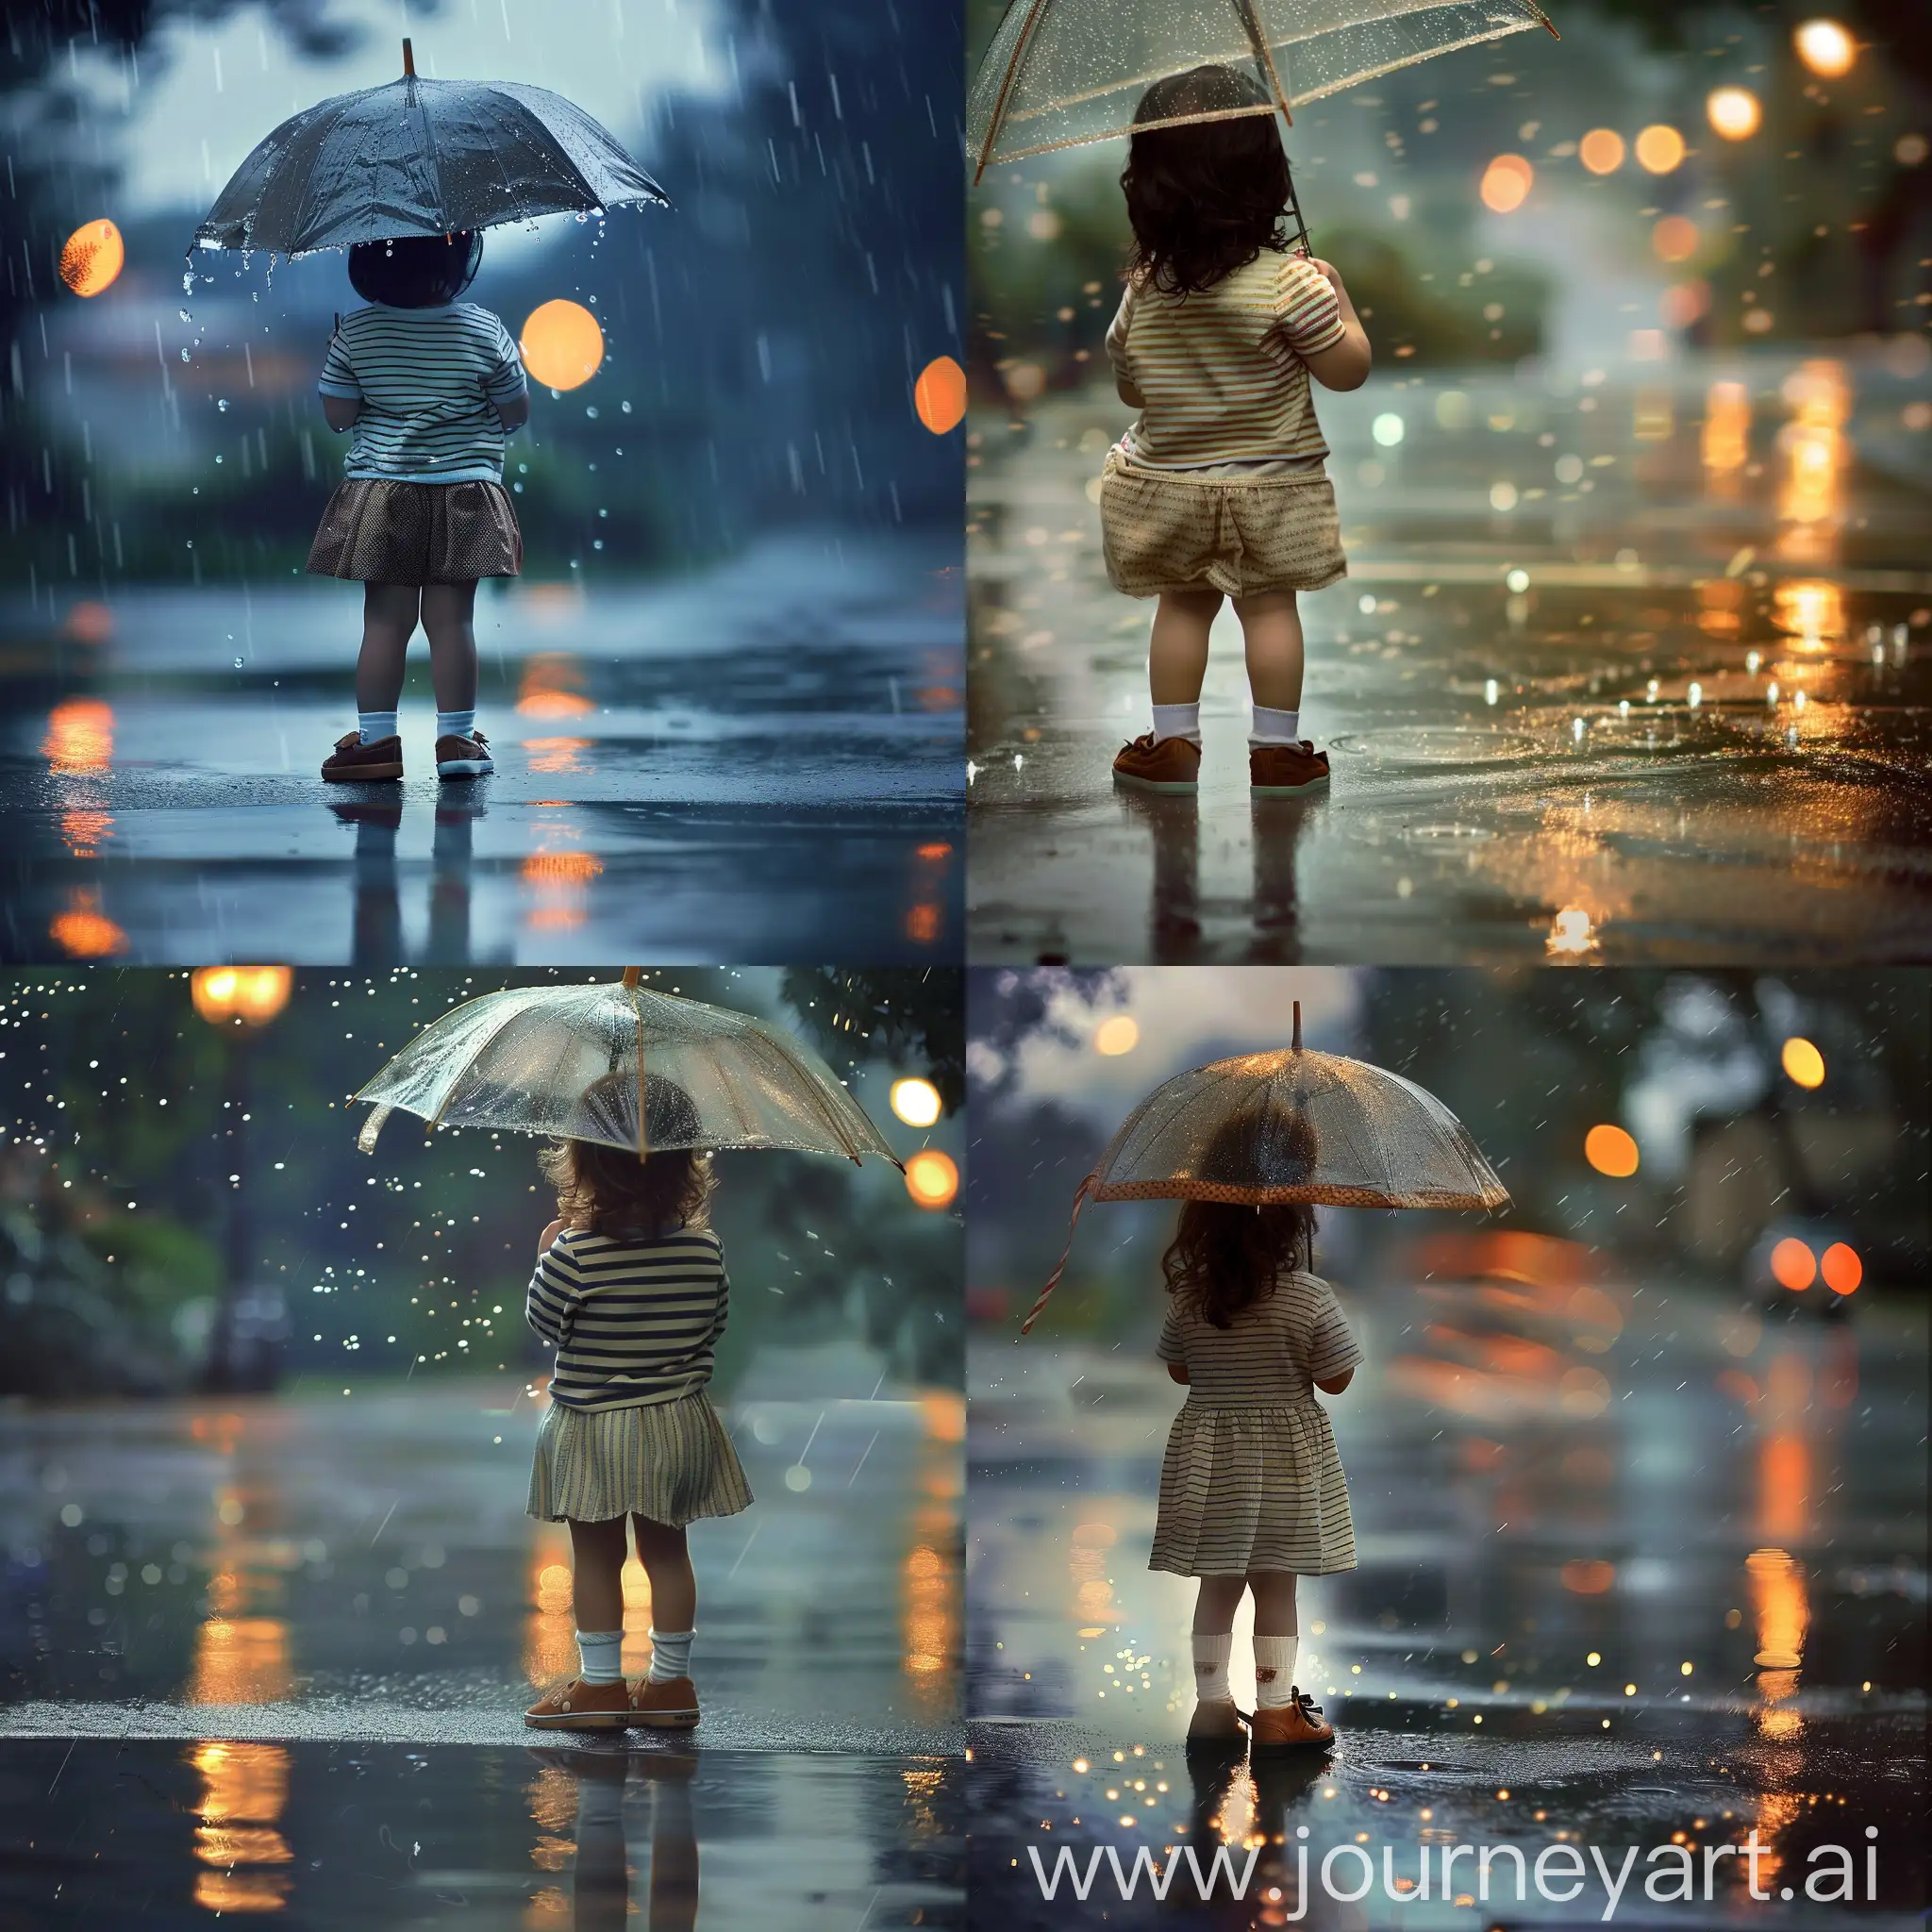 Solitude-in-Twilight-Child-with-Umbrella-in-Rainy-Reflection